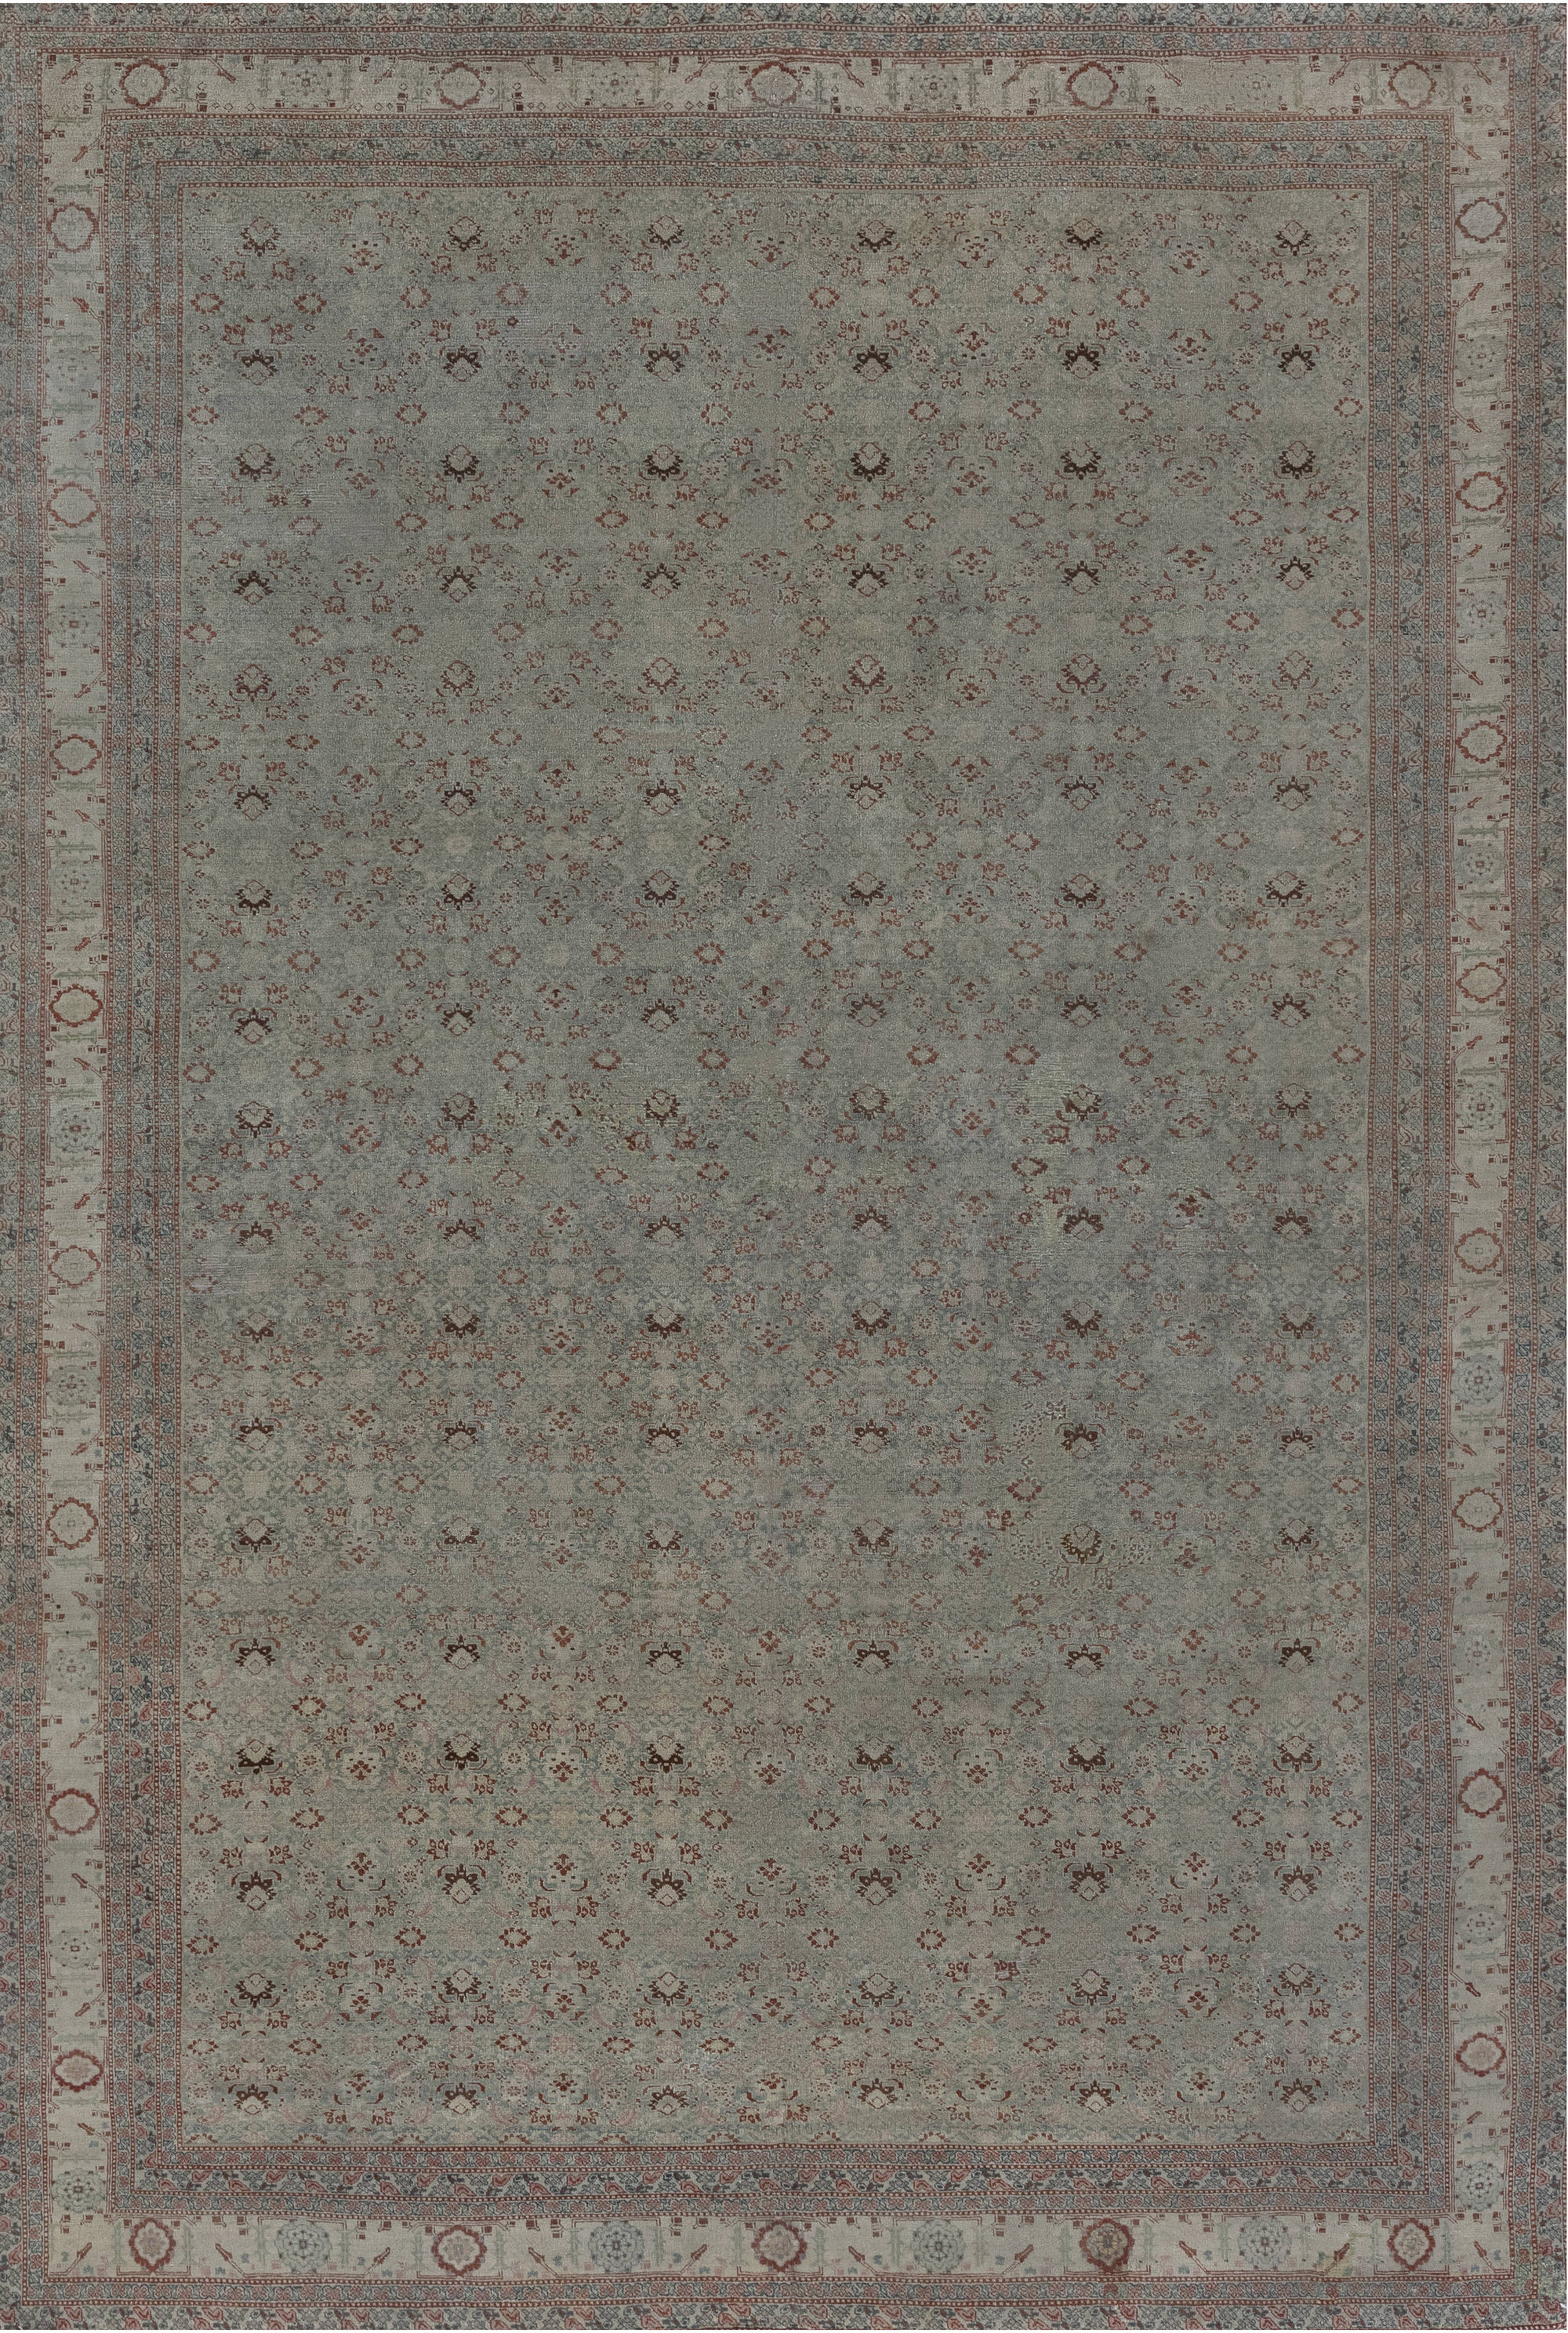 Authentic 19th Century Persian Tabriz Handmade Wool Rug BB7281